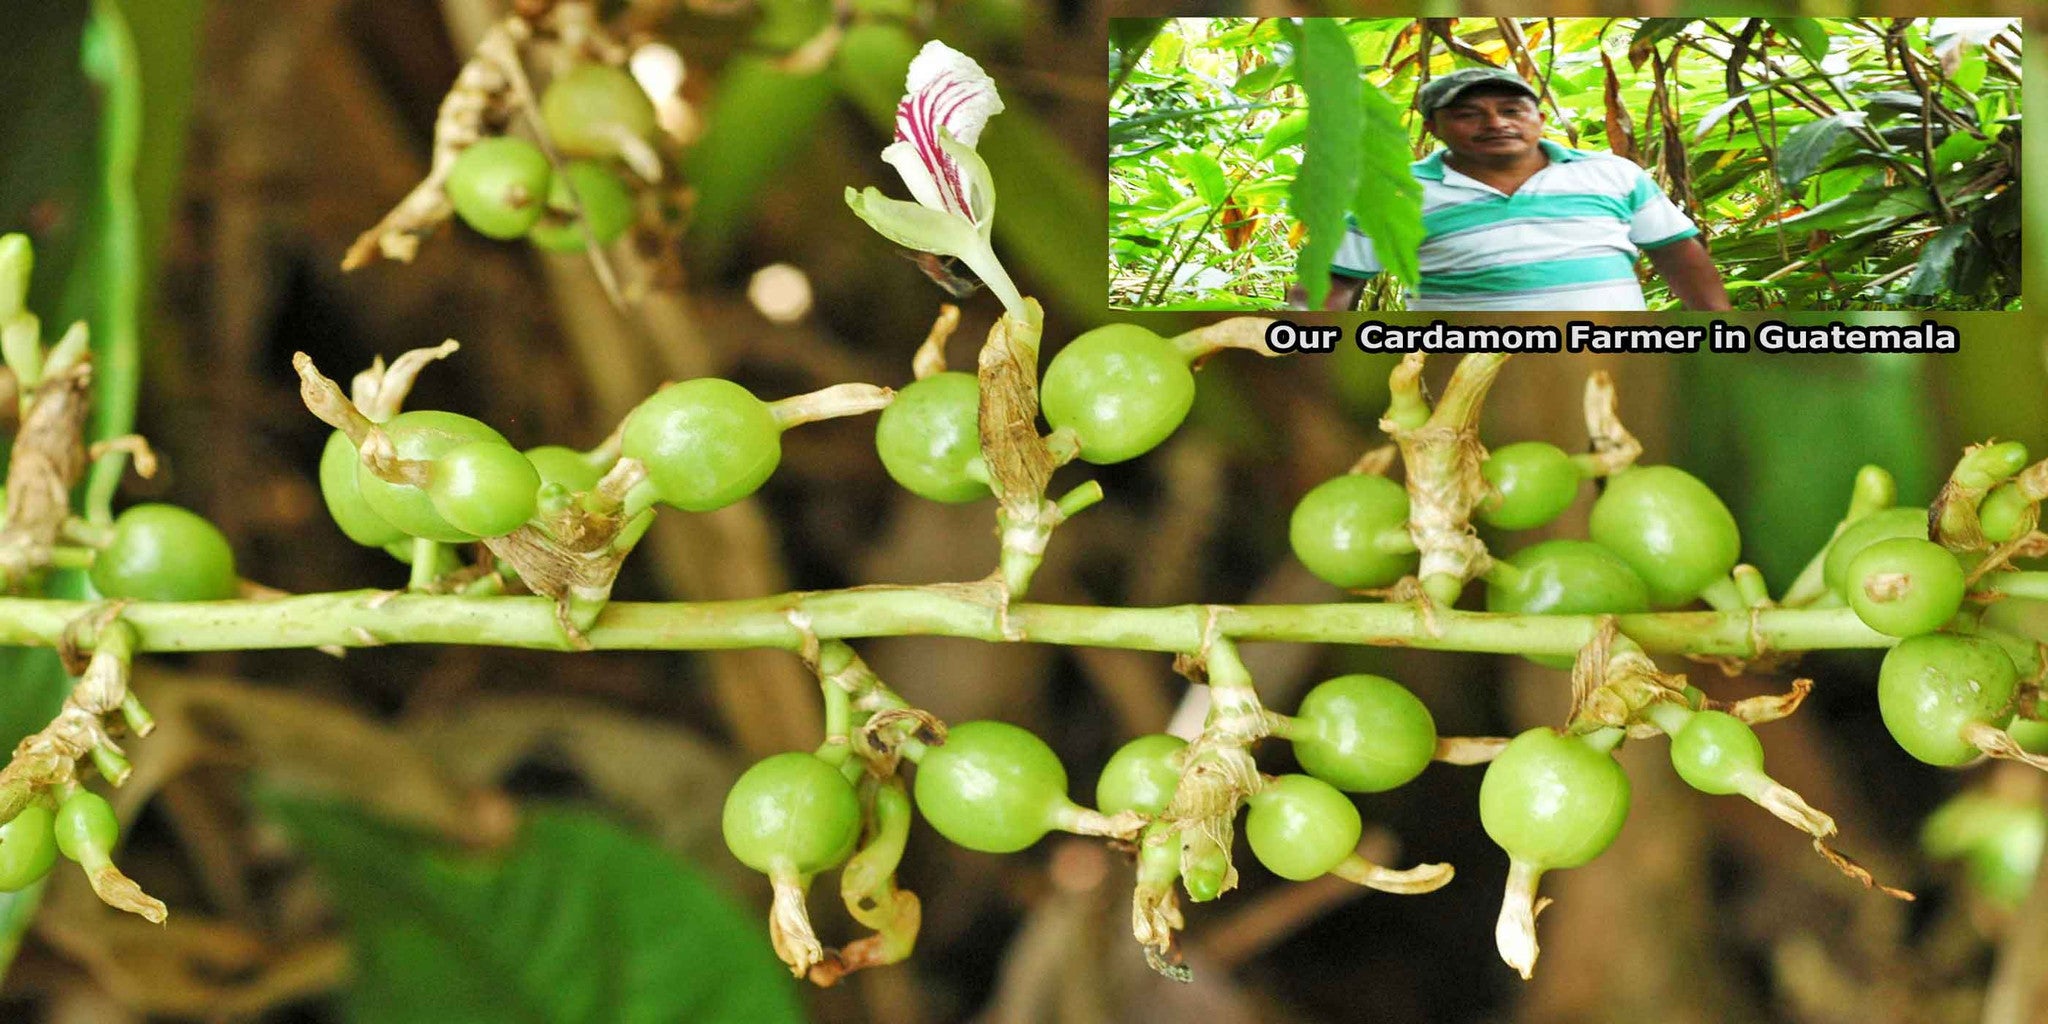 Cardamom Plant with Farmer